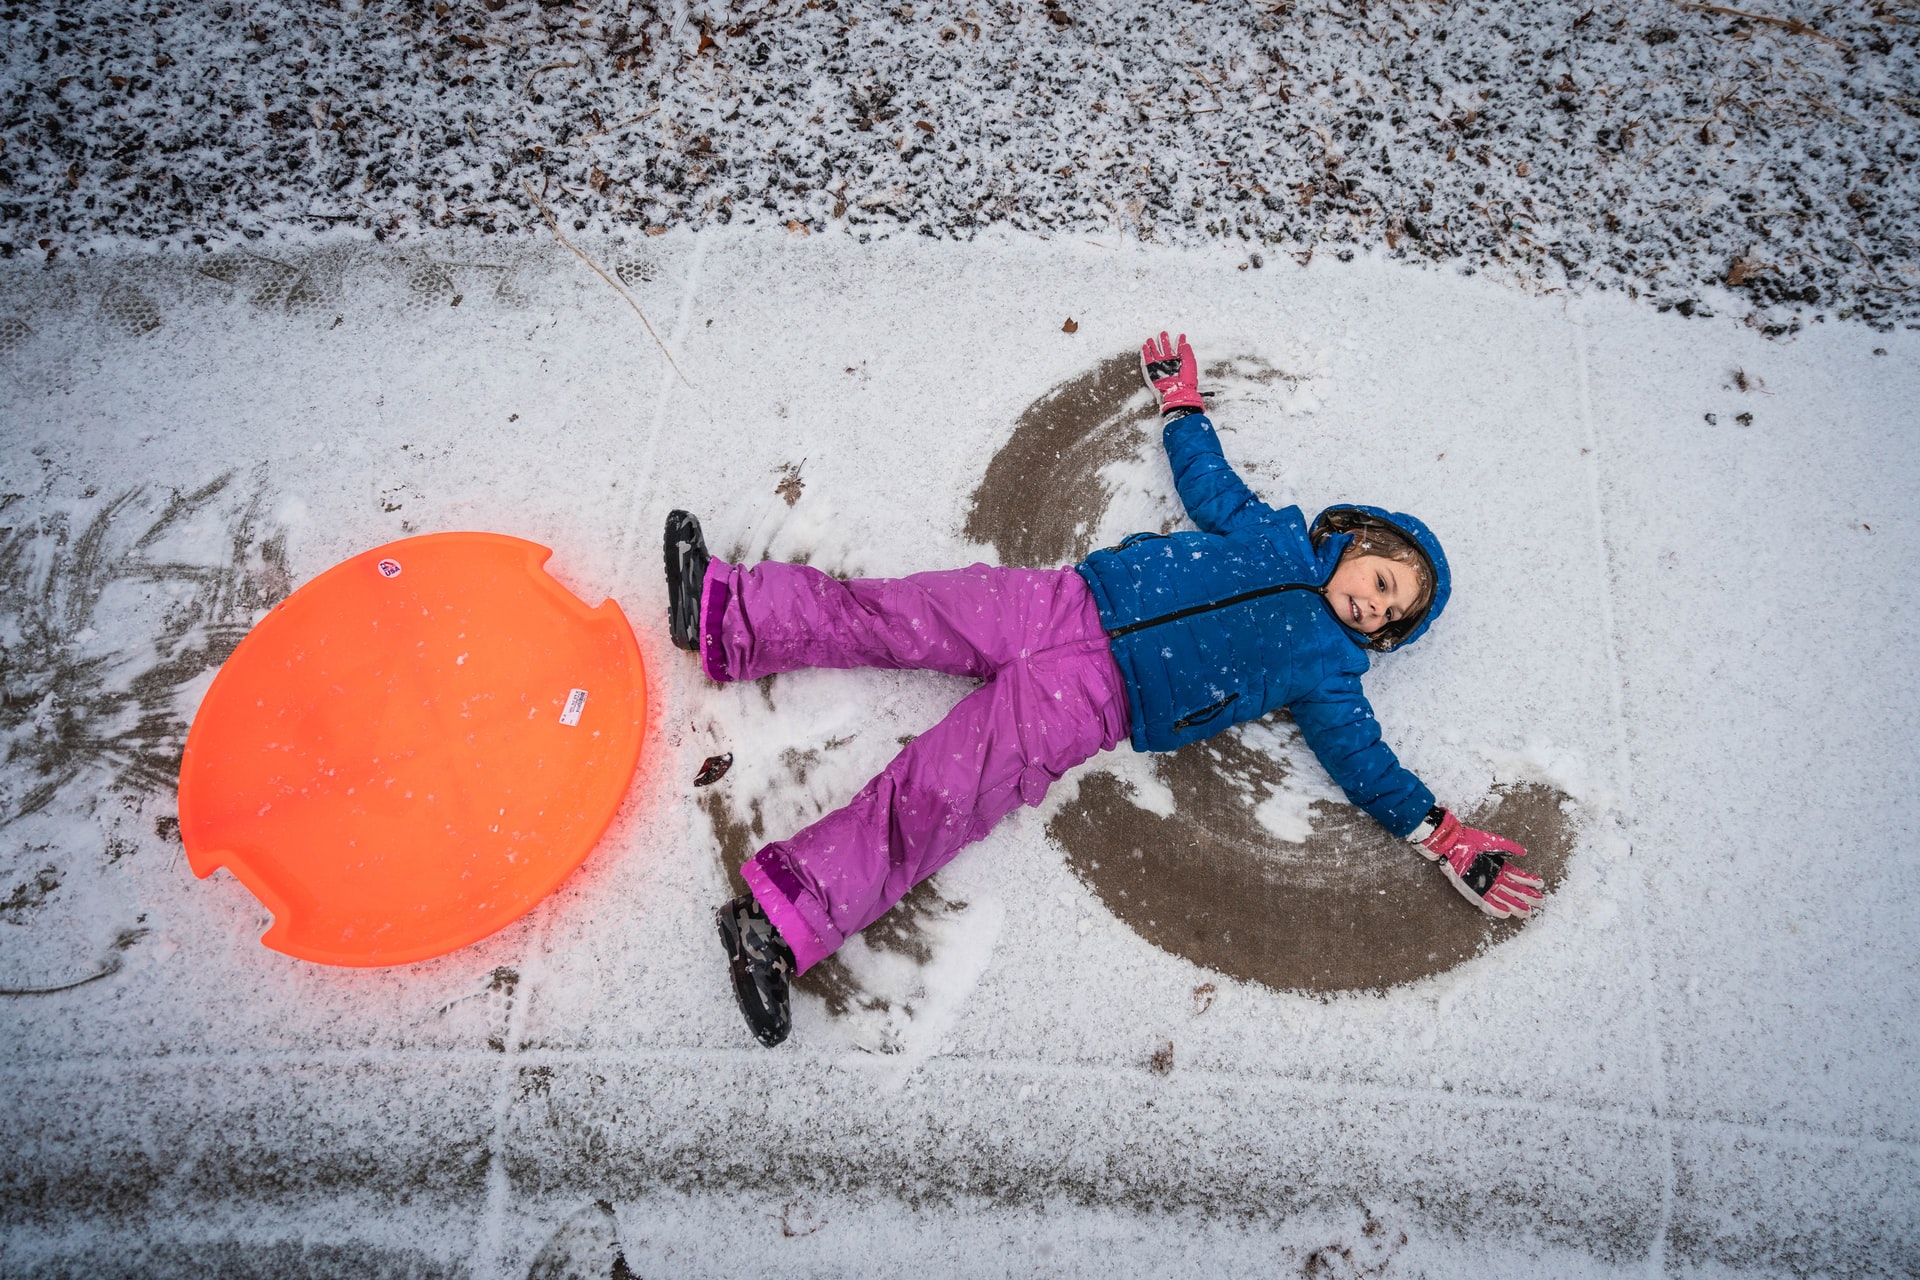 Girl making snow angel on sidewalk next to orange circular sled